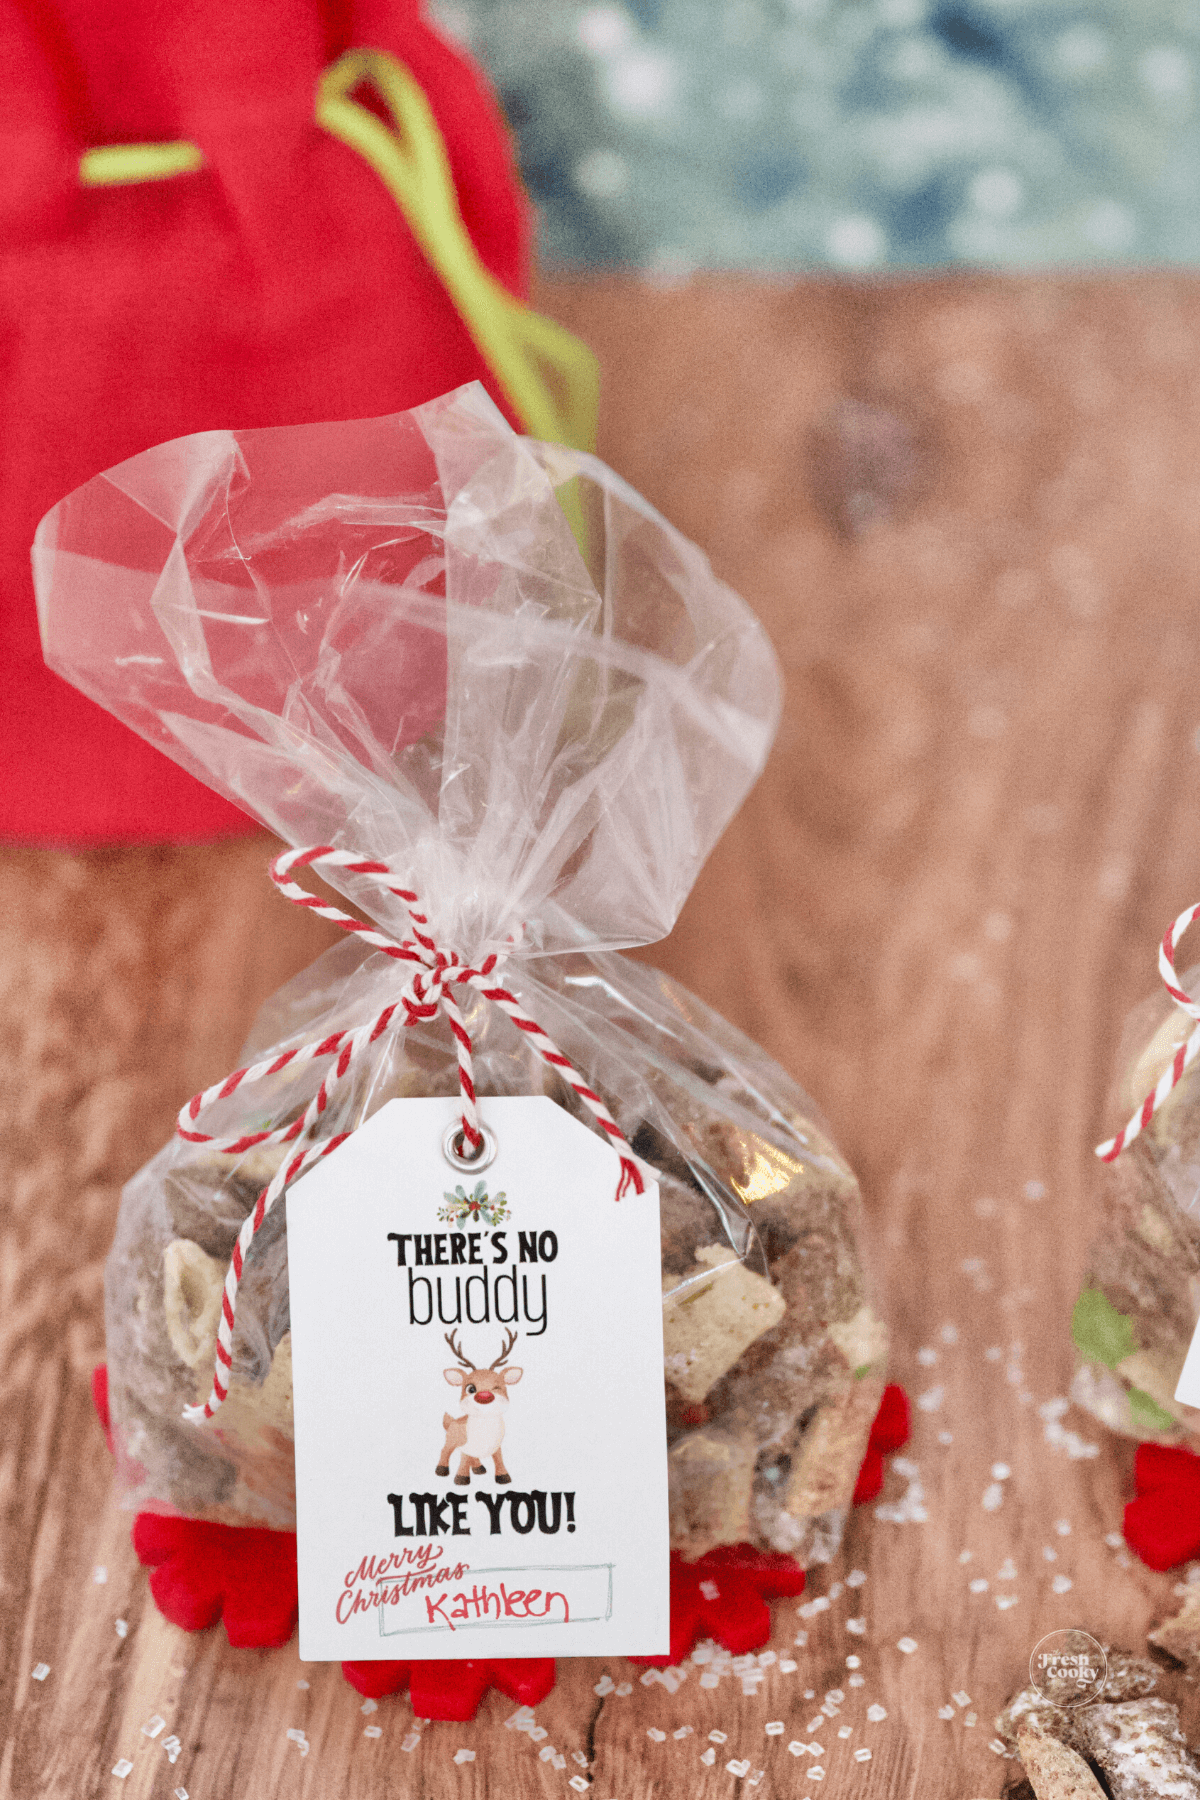 There's no Buddy like you free printable gift tag with Reindeer on bag of Reindeer Christmas Chex Mix. 